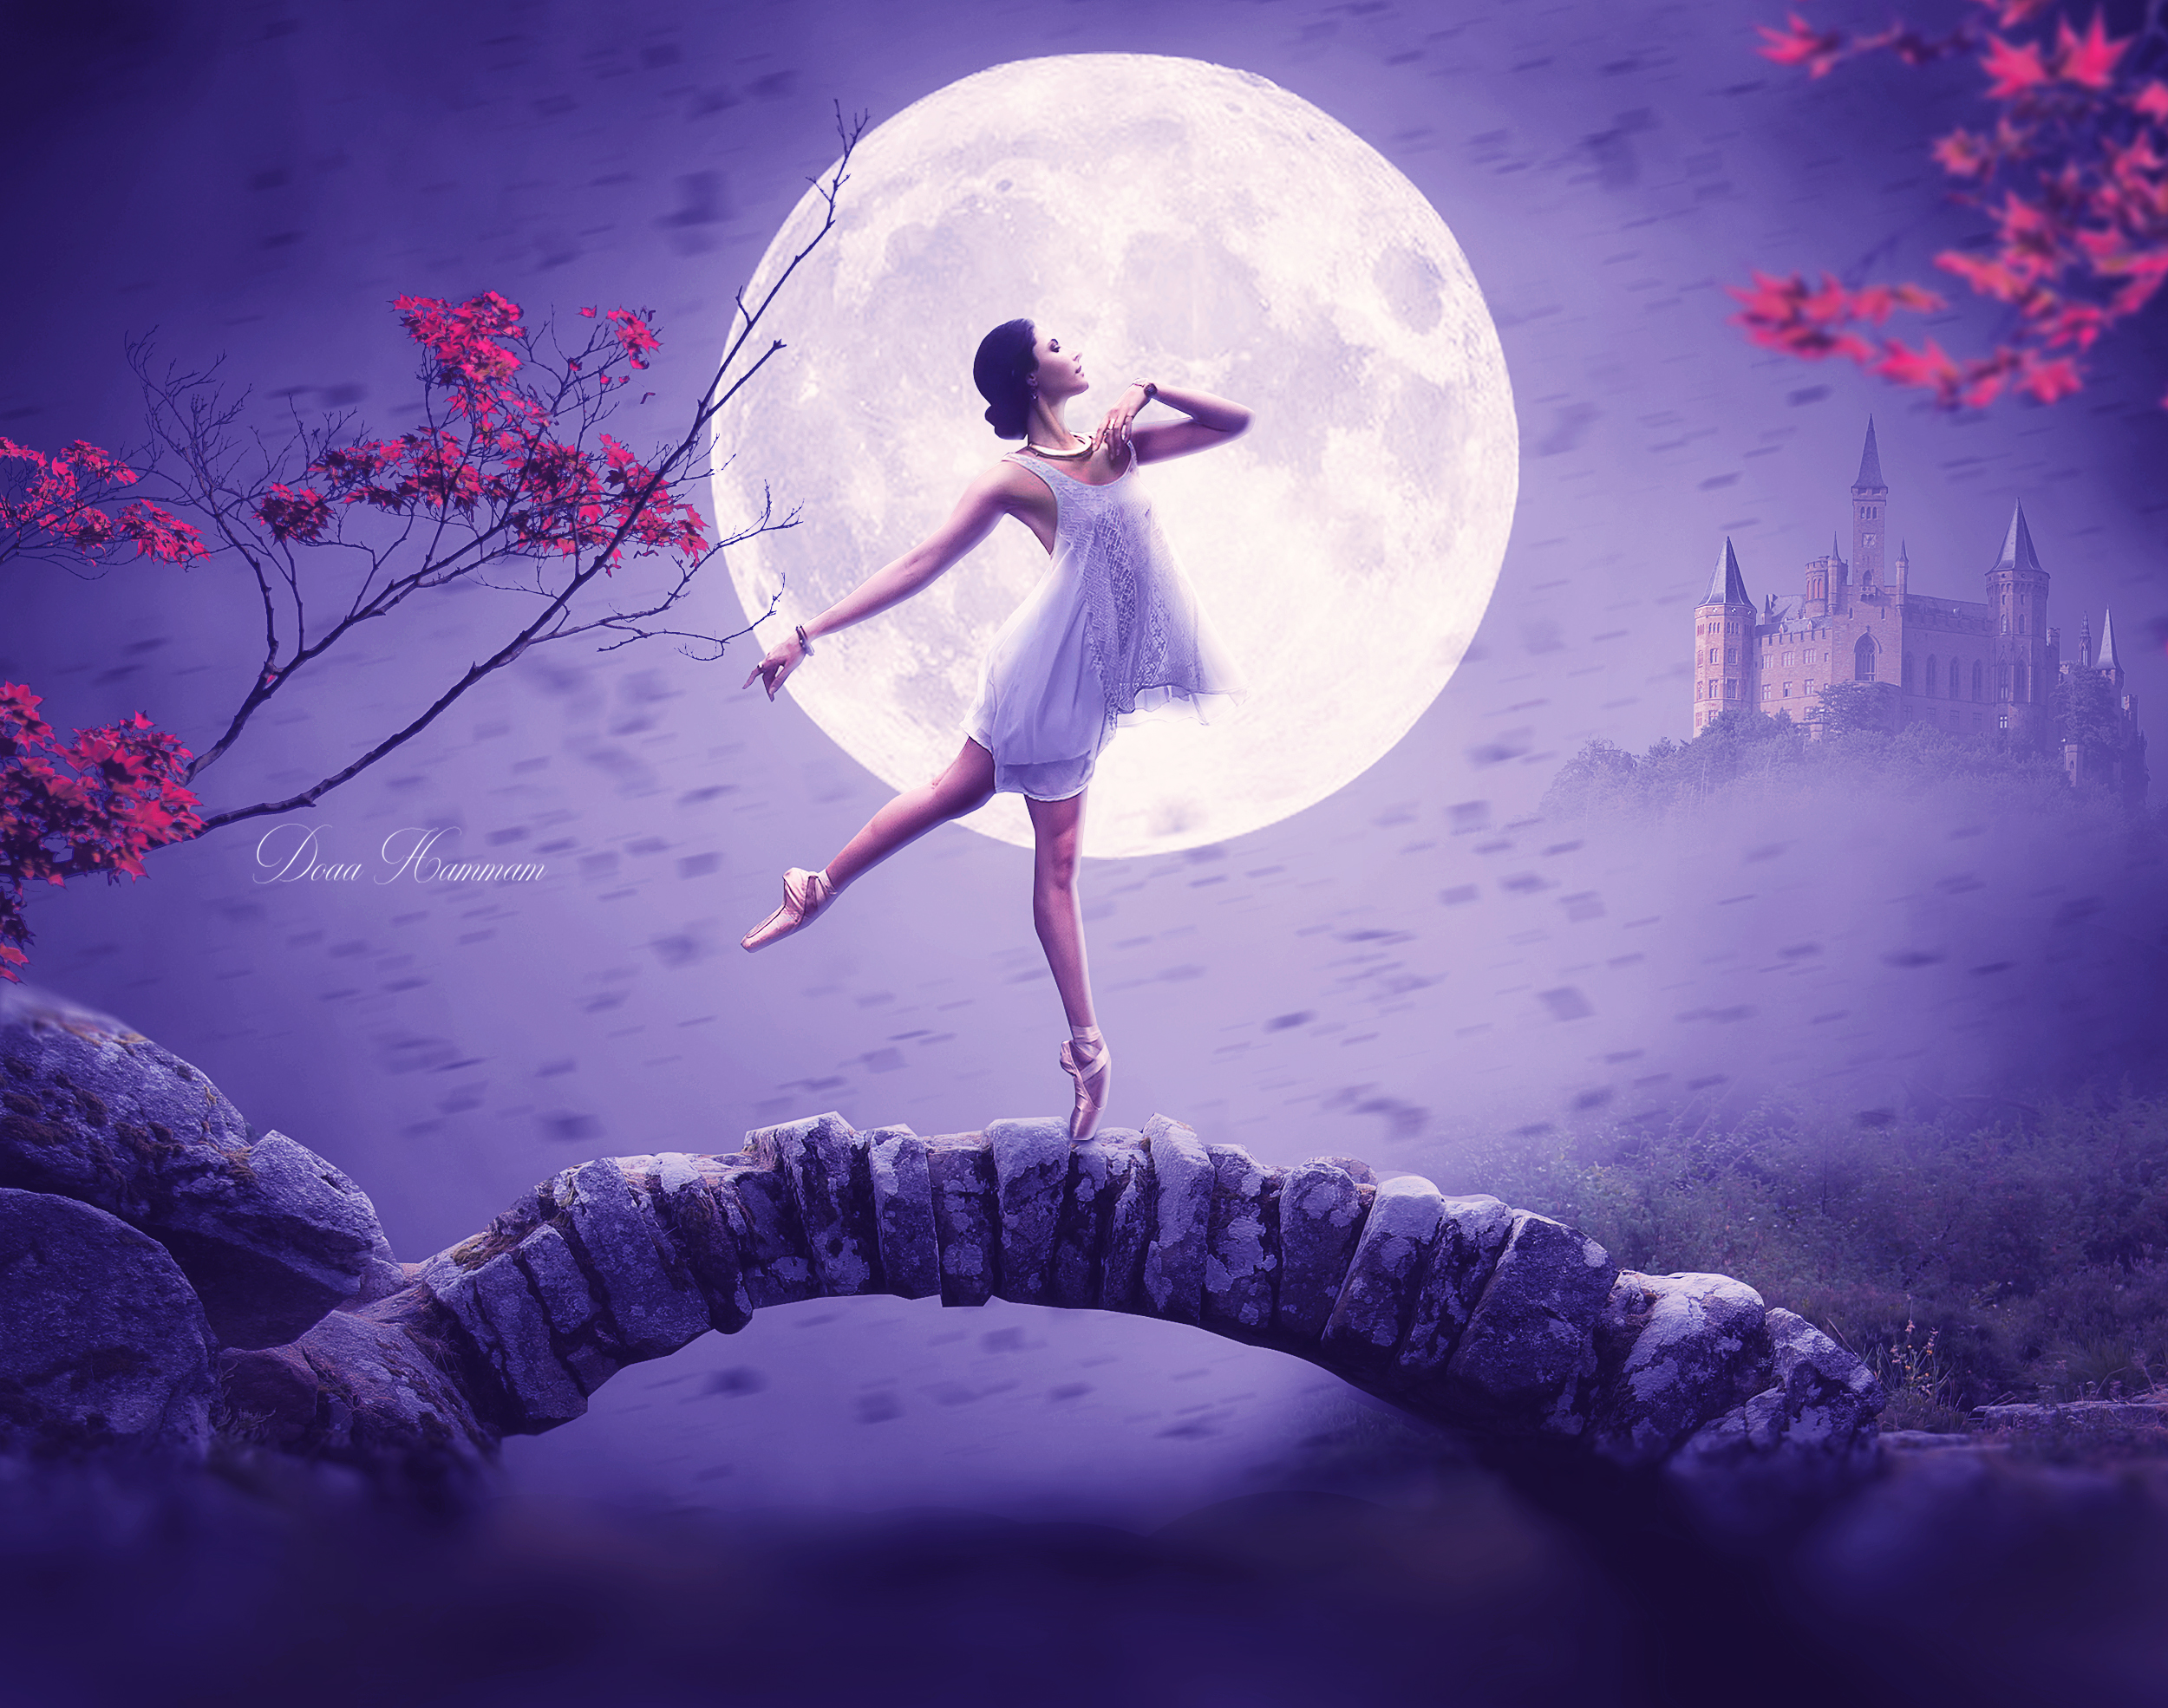 Ballerina on Stone Bridge in Fantasy Forest by Doaa Hammam